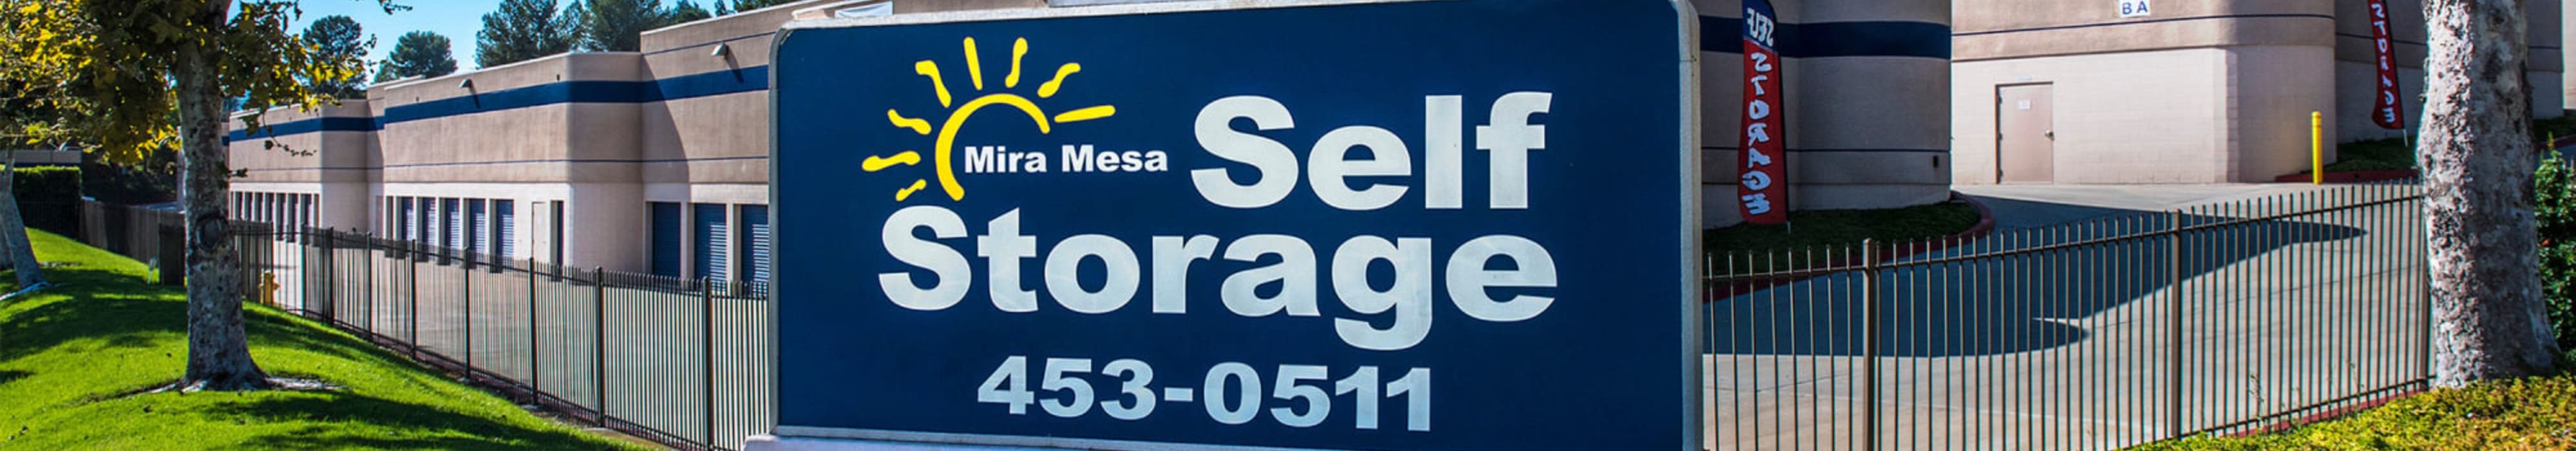 Branding on the exterior of Mira Mesa Self Storage in San Diego, California